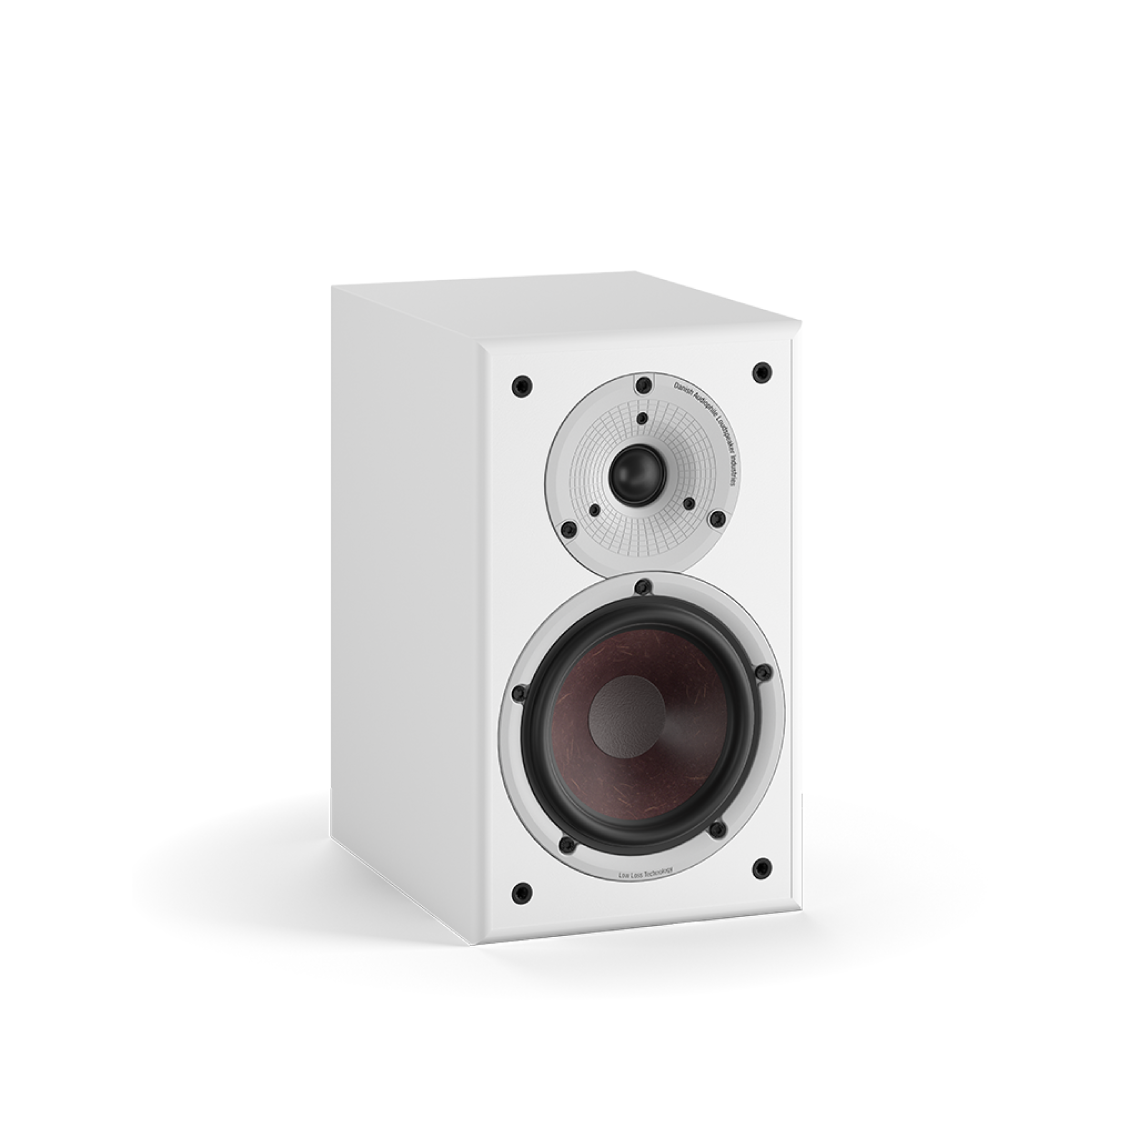 DALI APAC - Loving this audio setup featuring the DALI Spektor 2